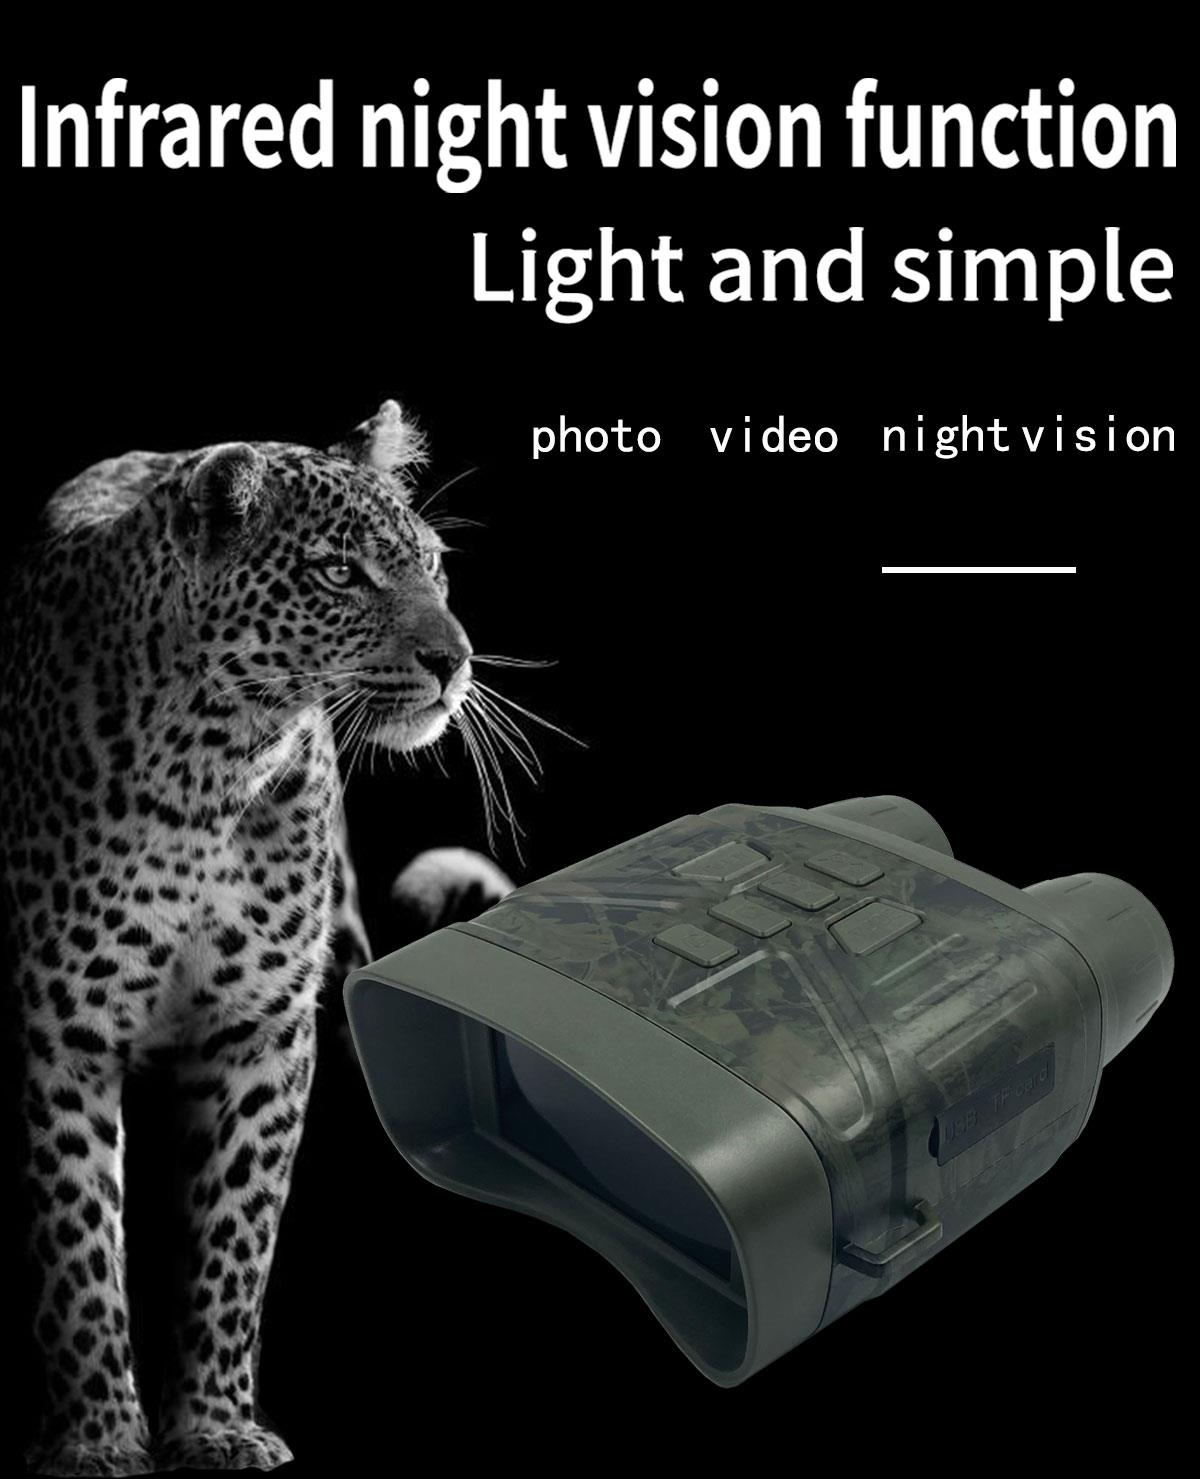 NV4000C 36MP 4K 5X Digital Zoom Night Vision Goggles 3 inch Display Infrared Optical Binocular Night-Vision Photo Video Taking 150-200M Full Dark Viewing Distance